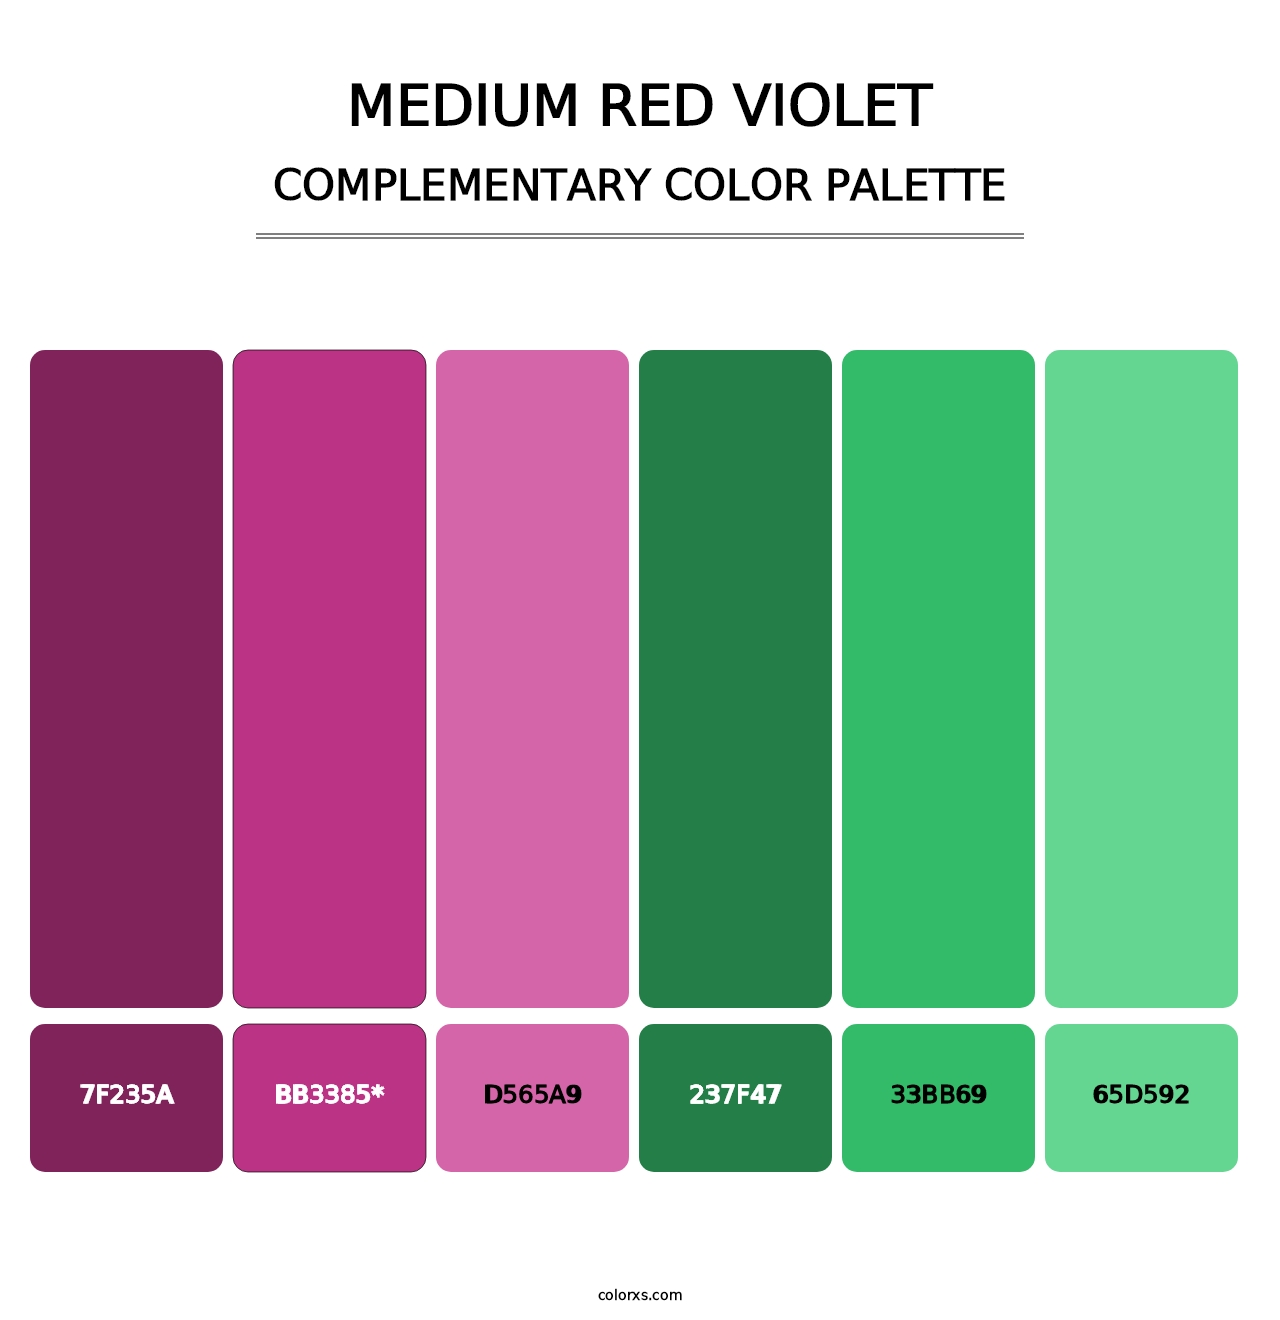 Medium Red Violet - Complementary Color Palette